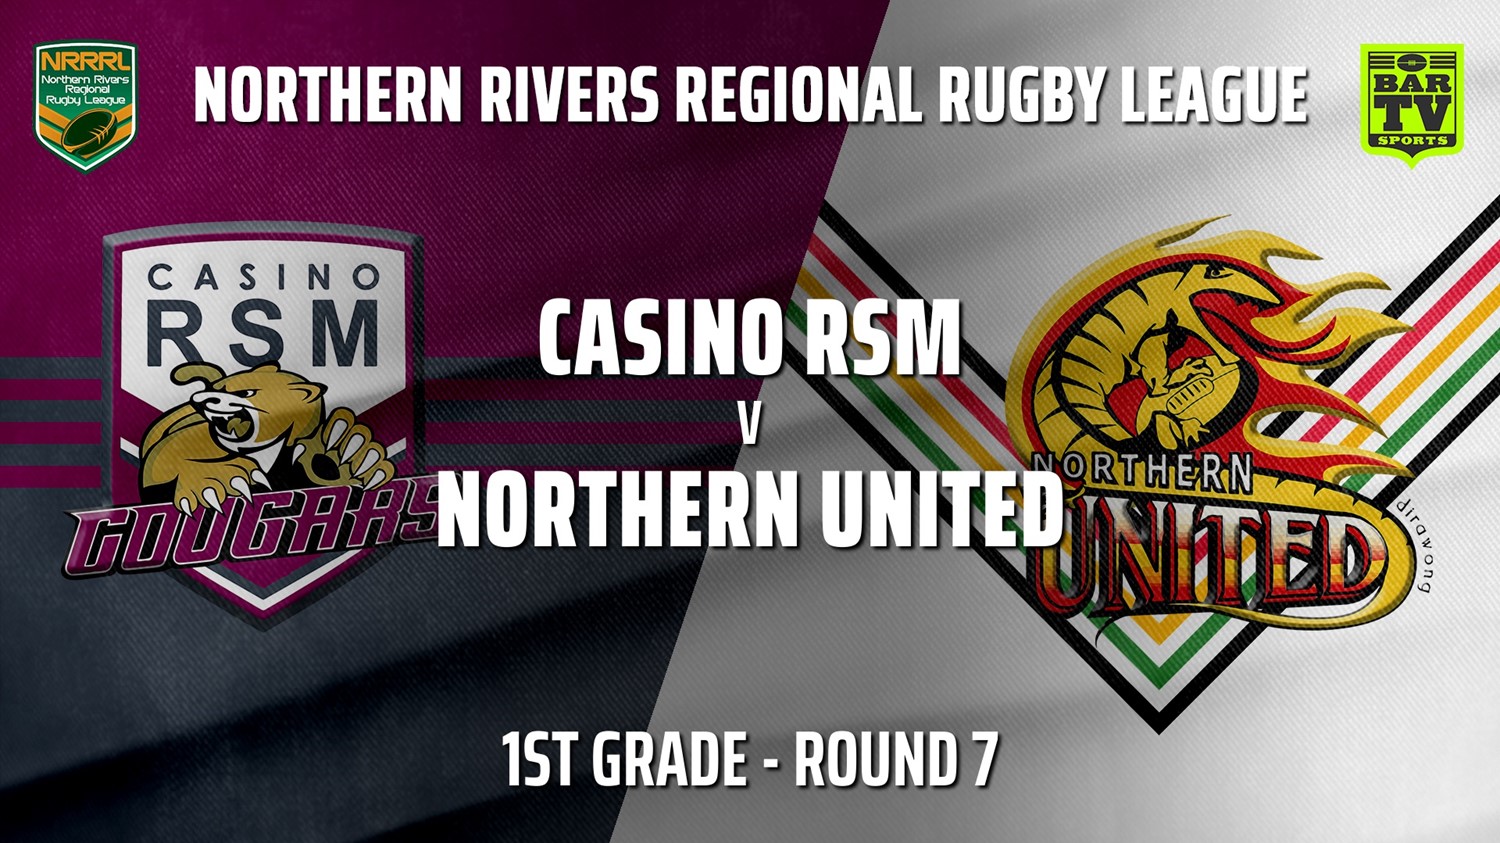 210620-Northern Rivers Round 7 - 1st Grade - Casino RSM Cougars v Northern United Slate Image